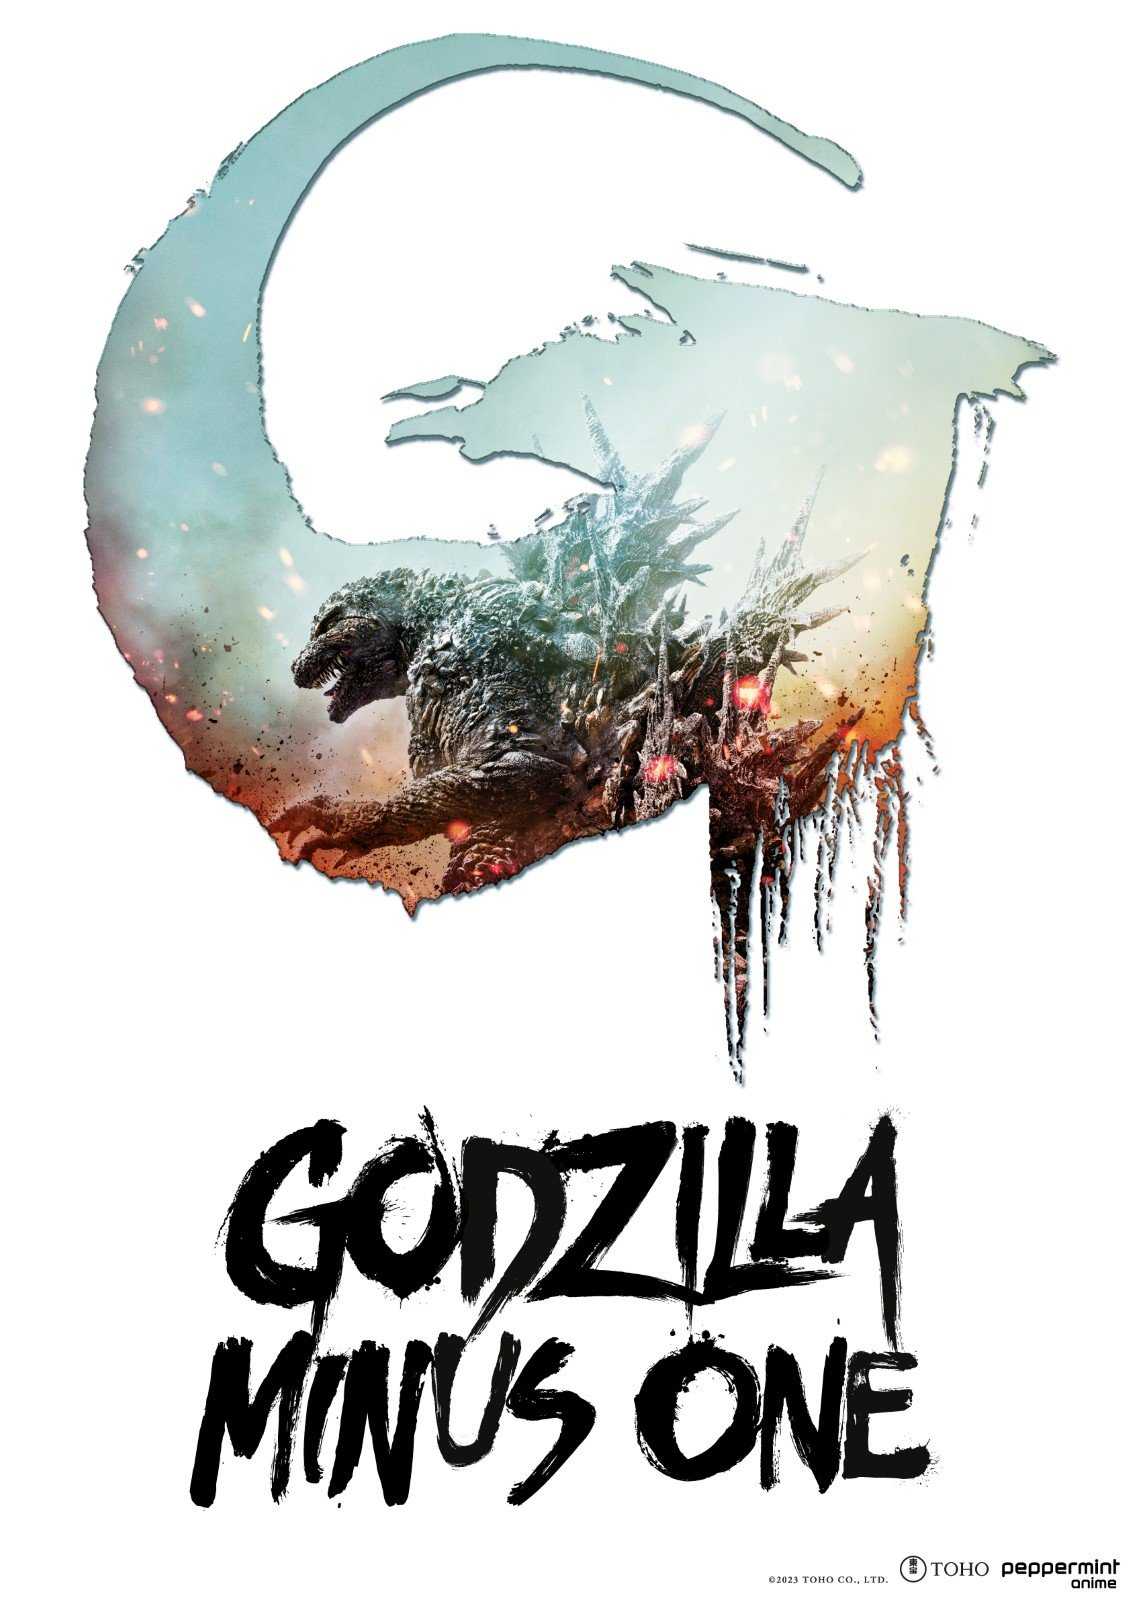 Godzilla Minus One in streaming